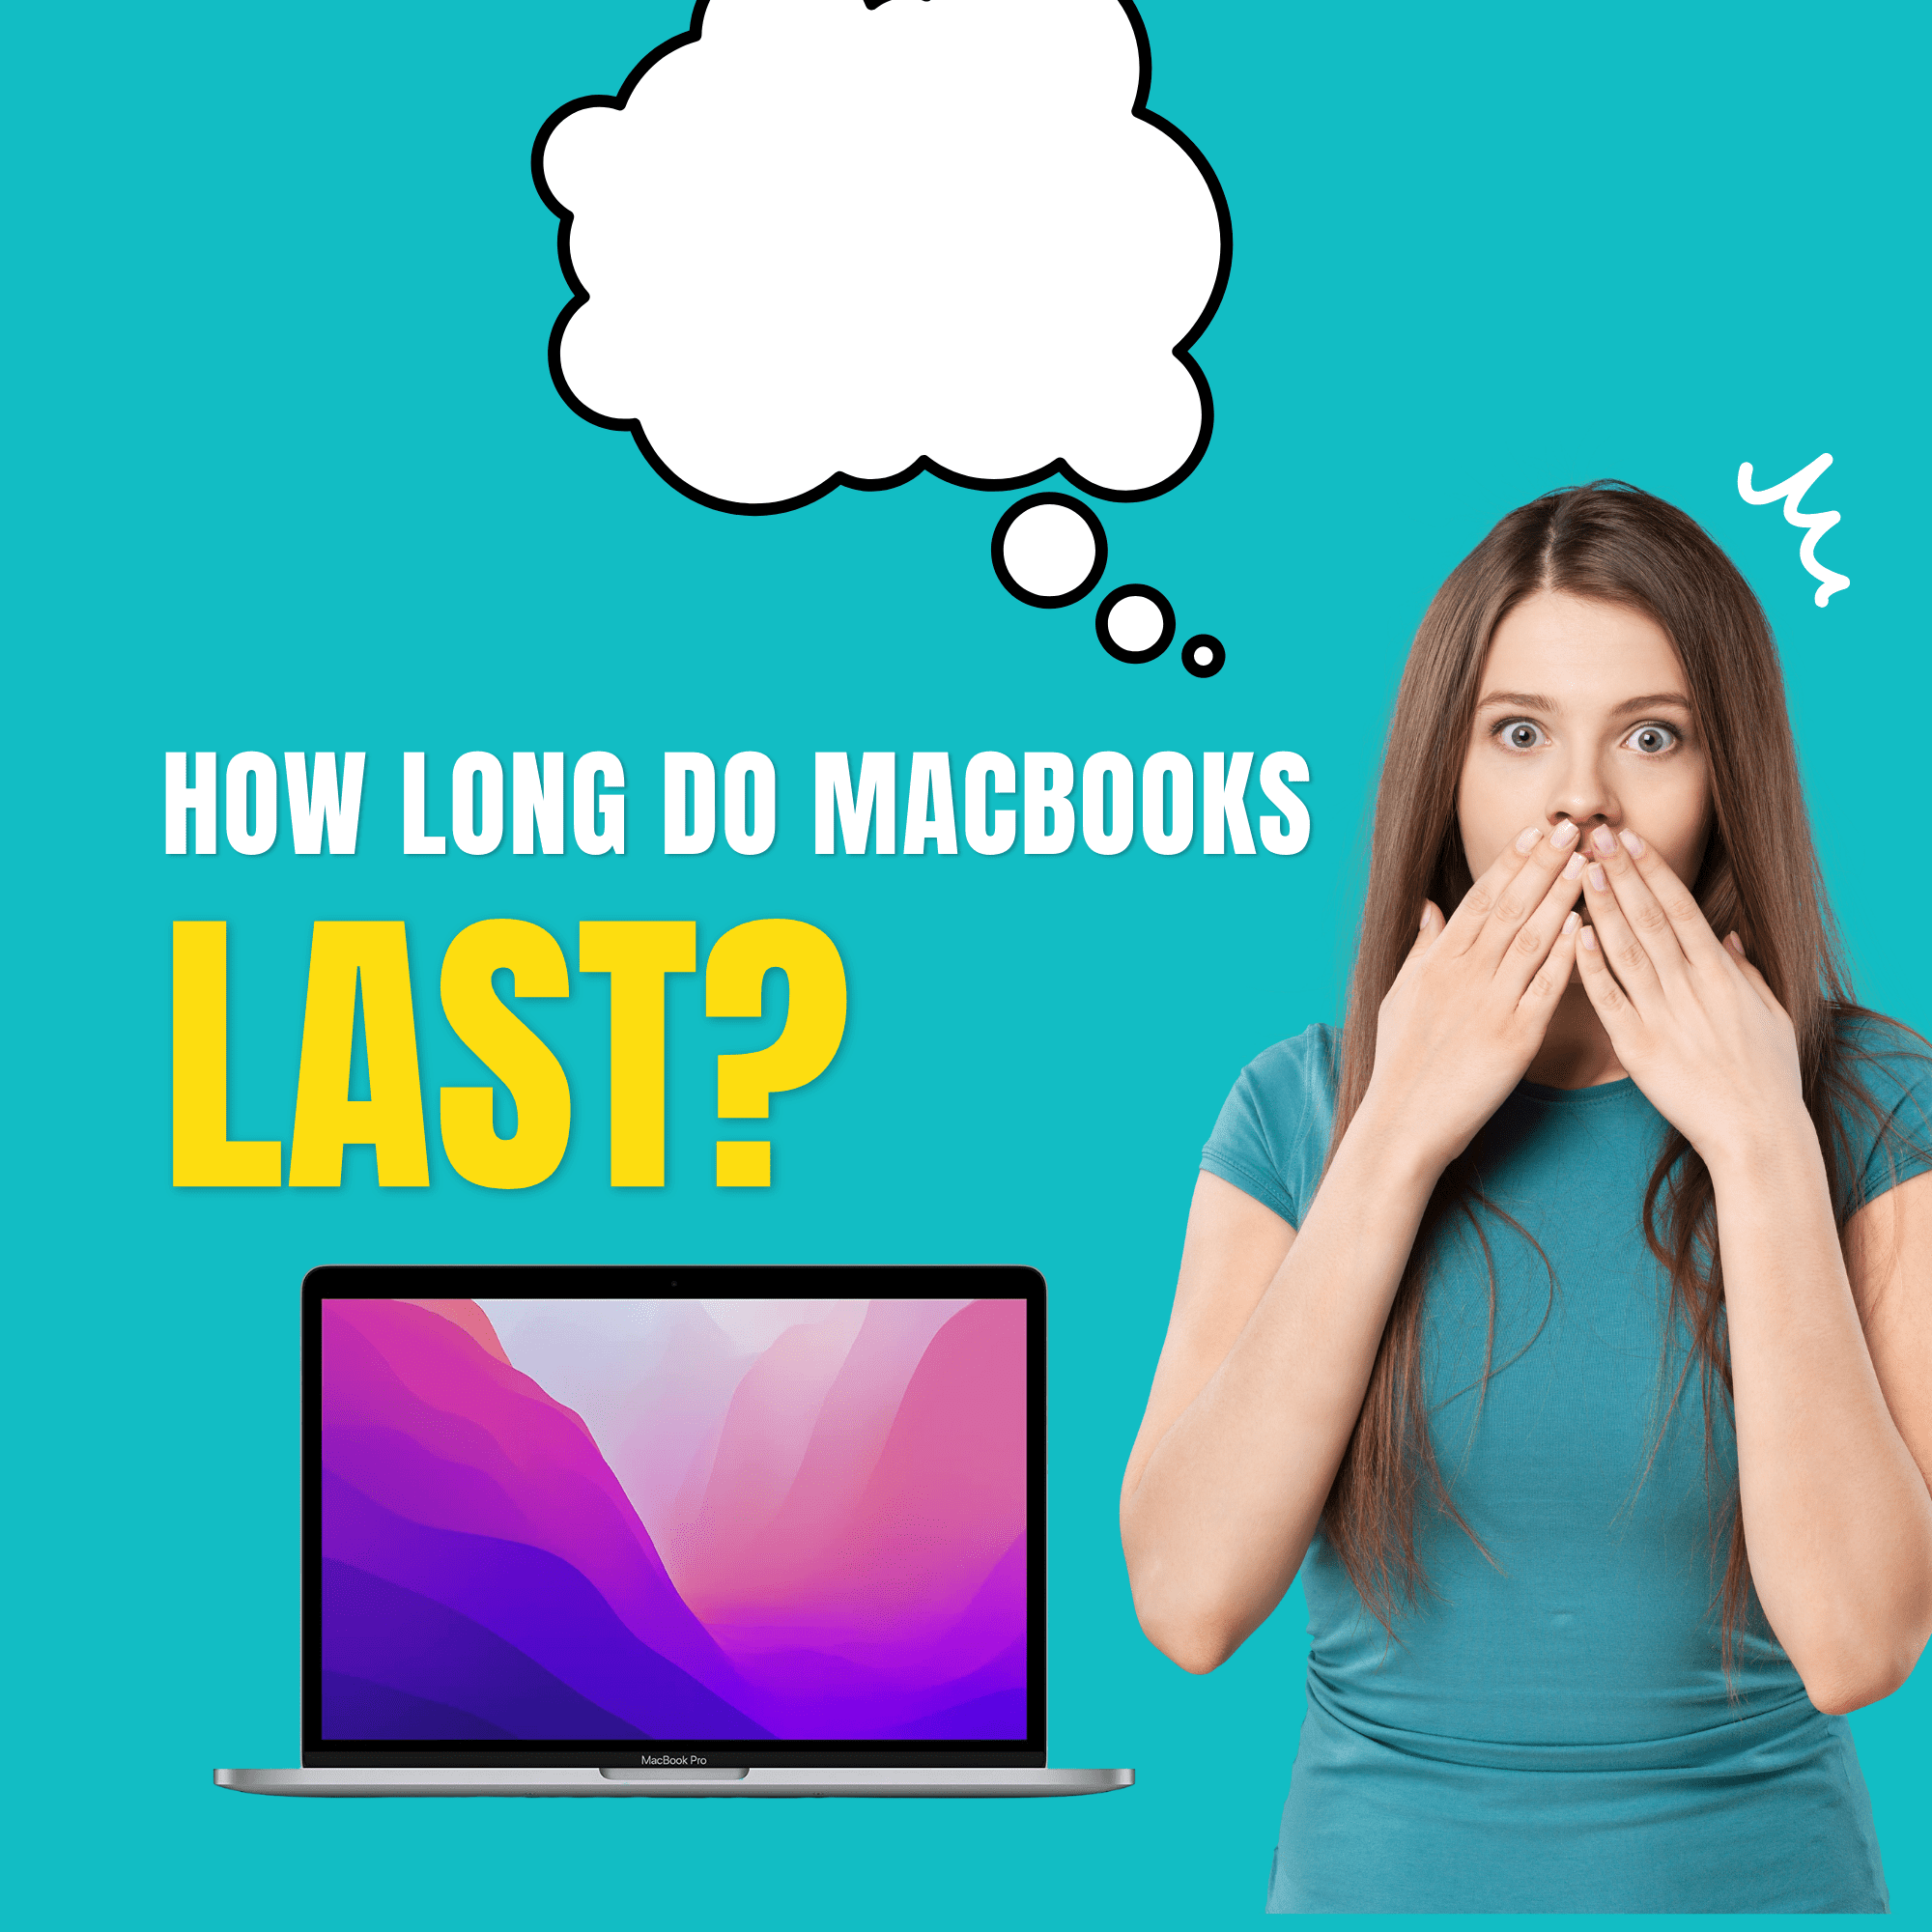 how long do macbooks last on average - answered